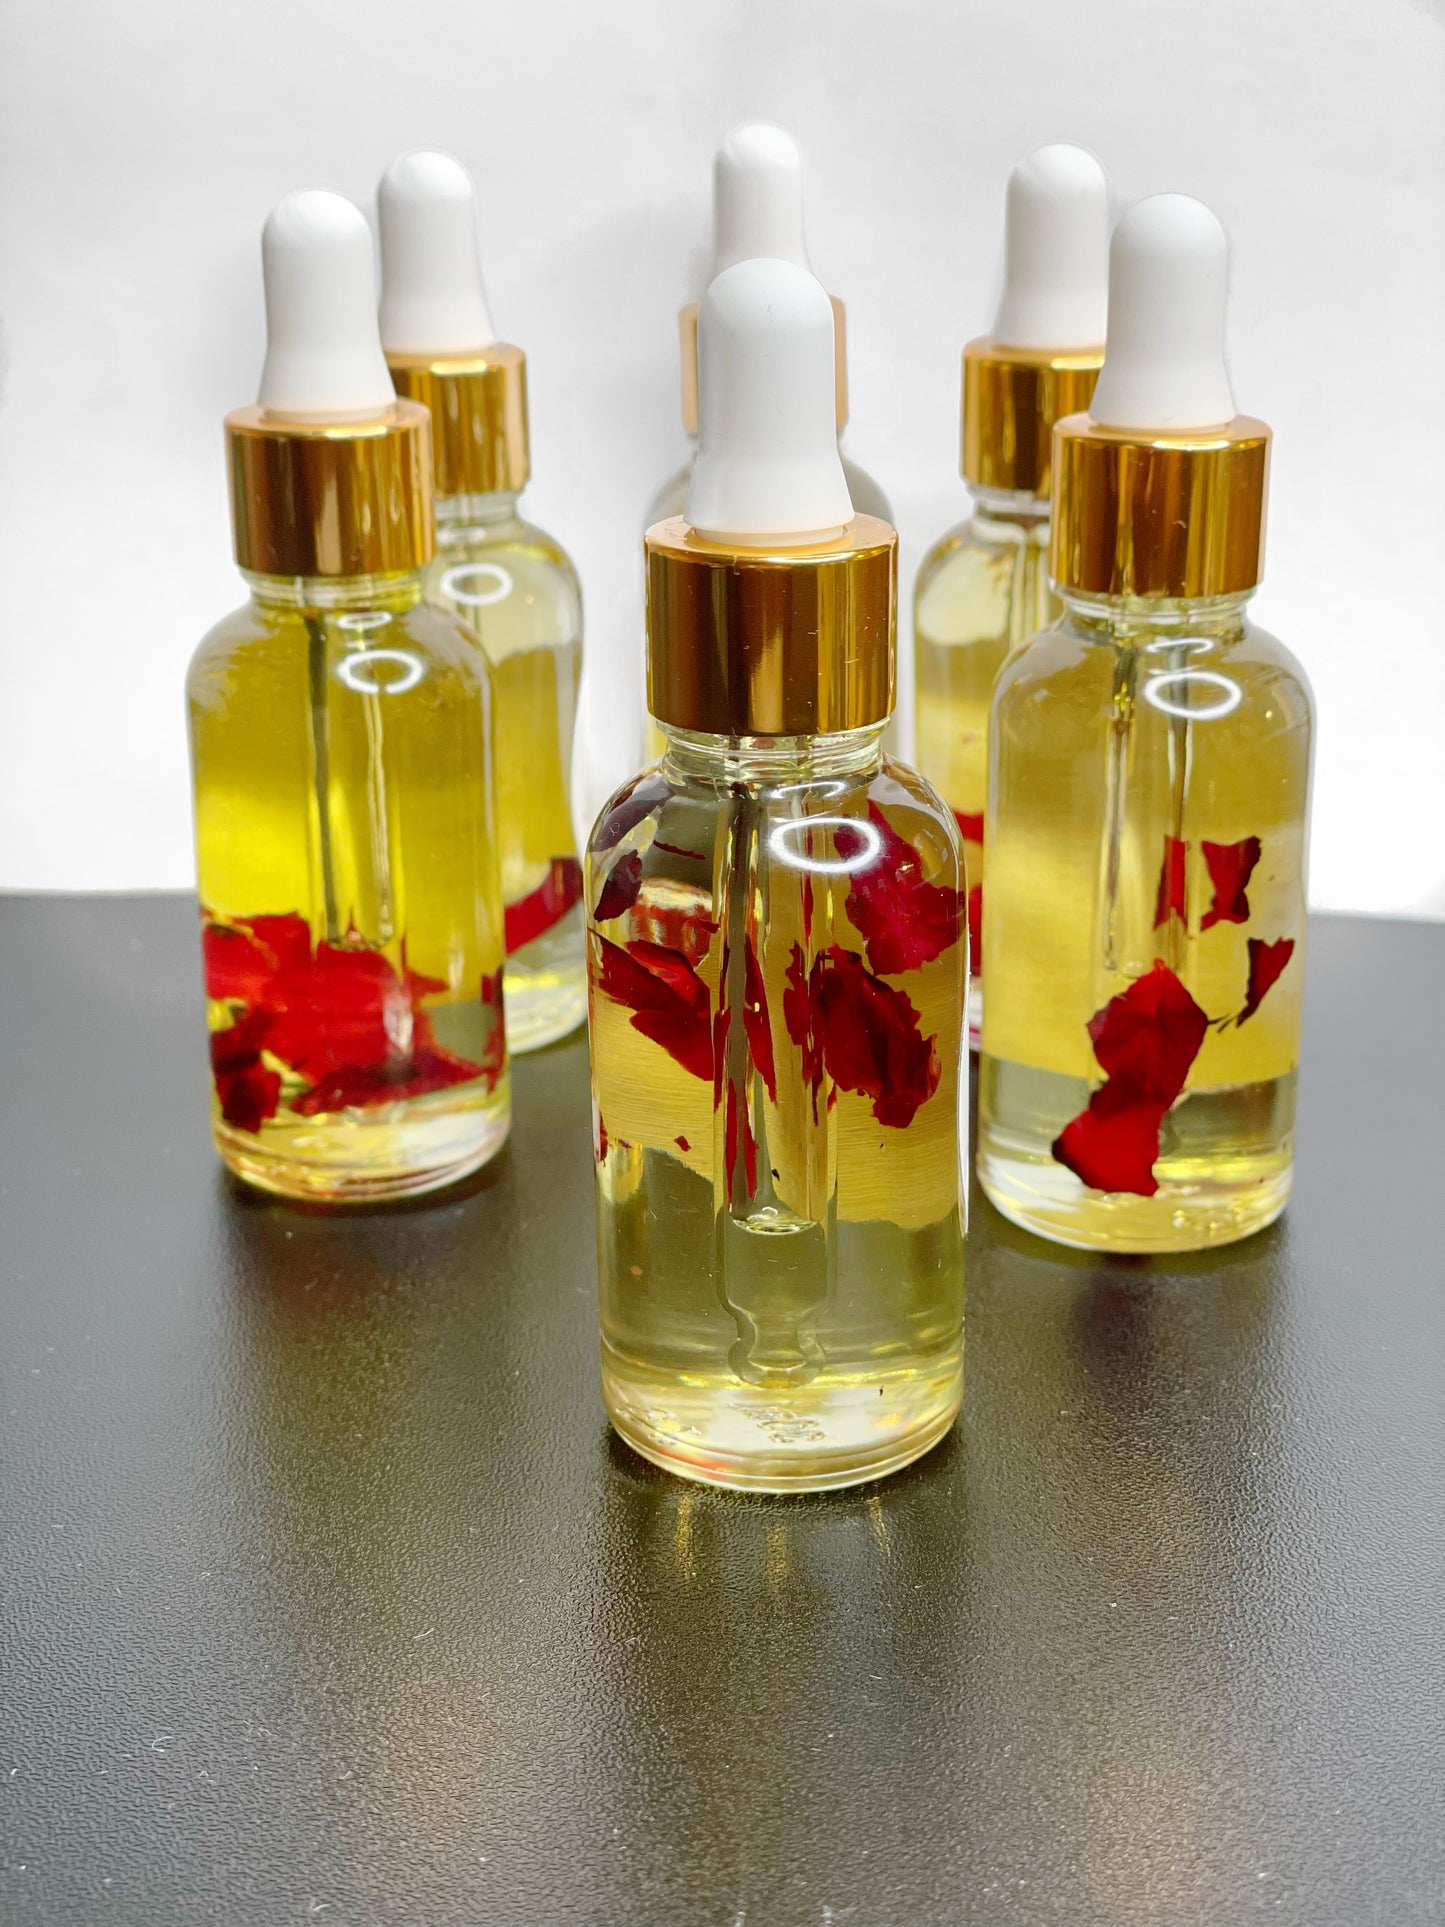 Vanilla rose cuticle oil